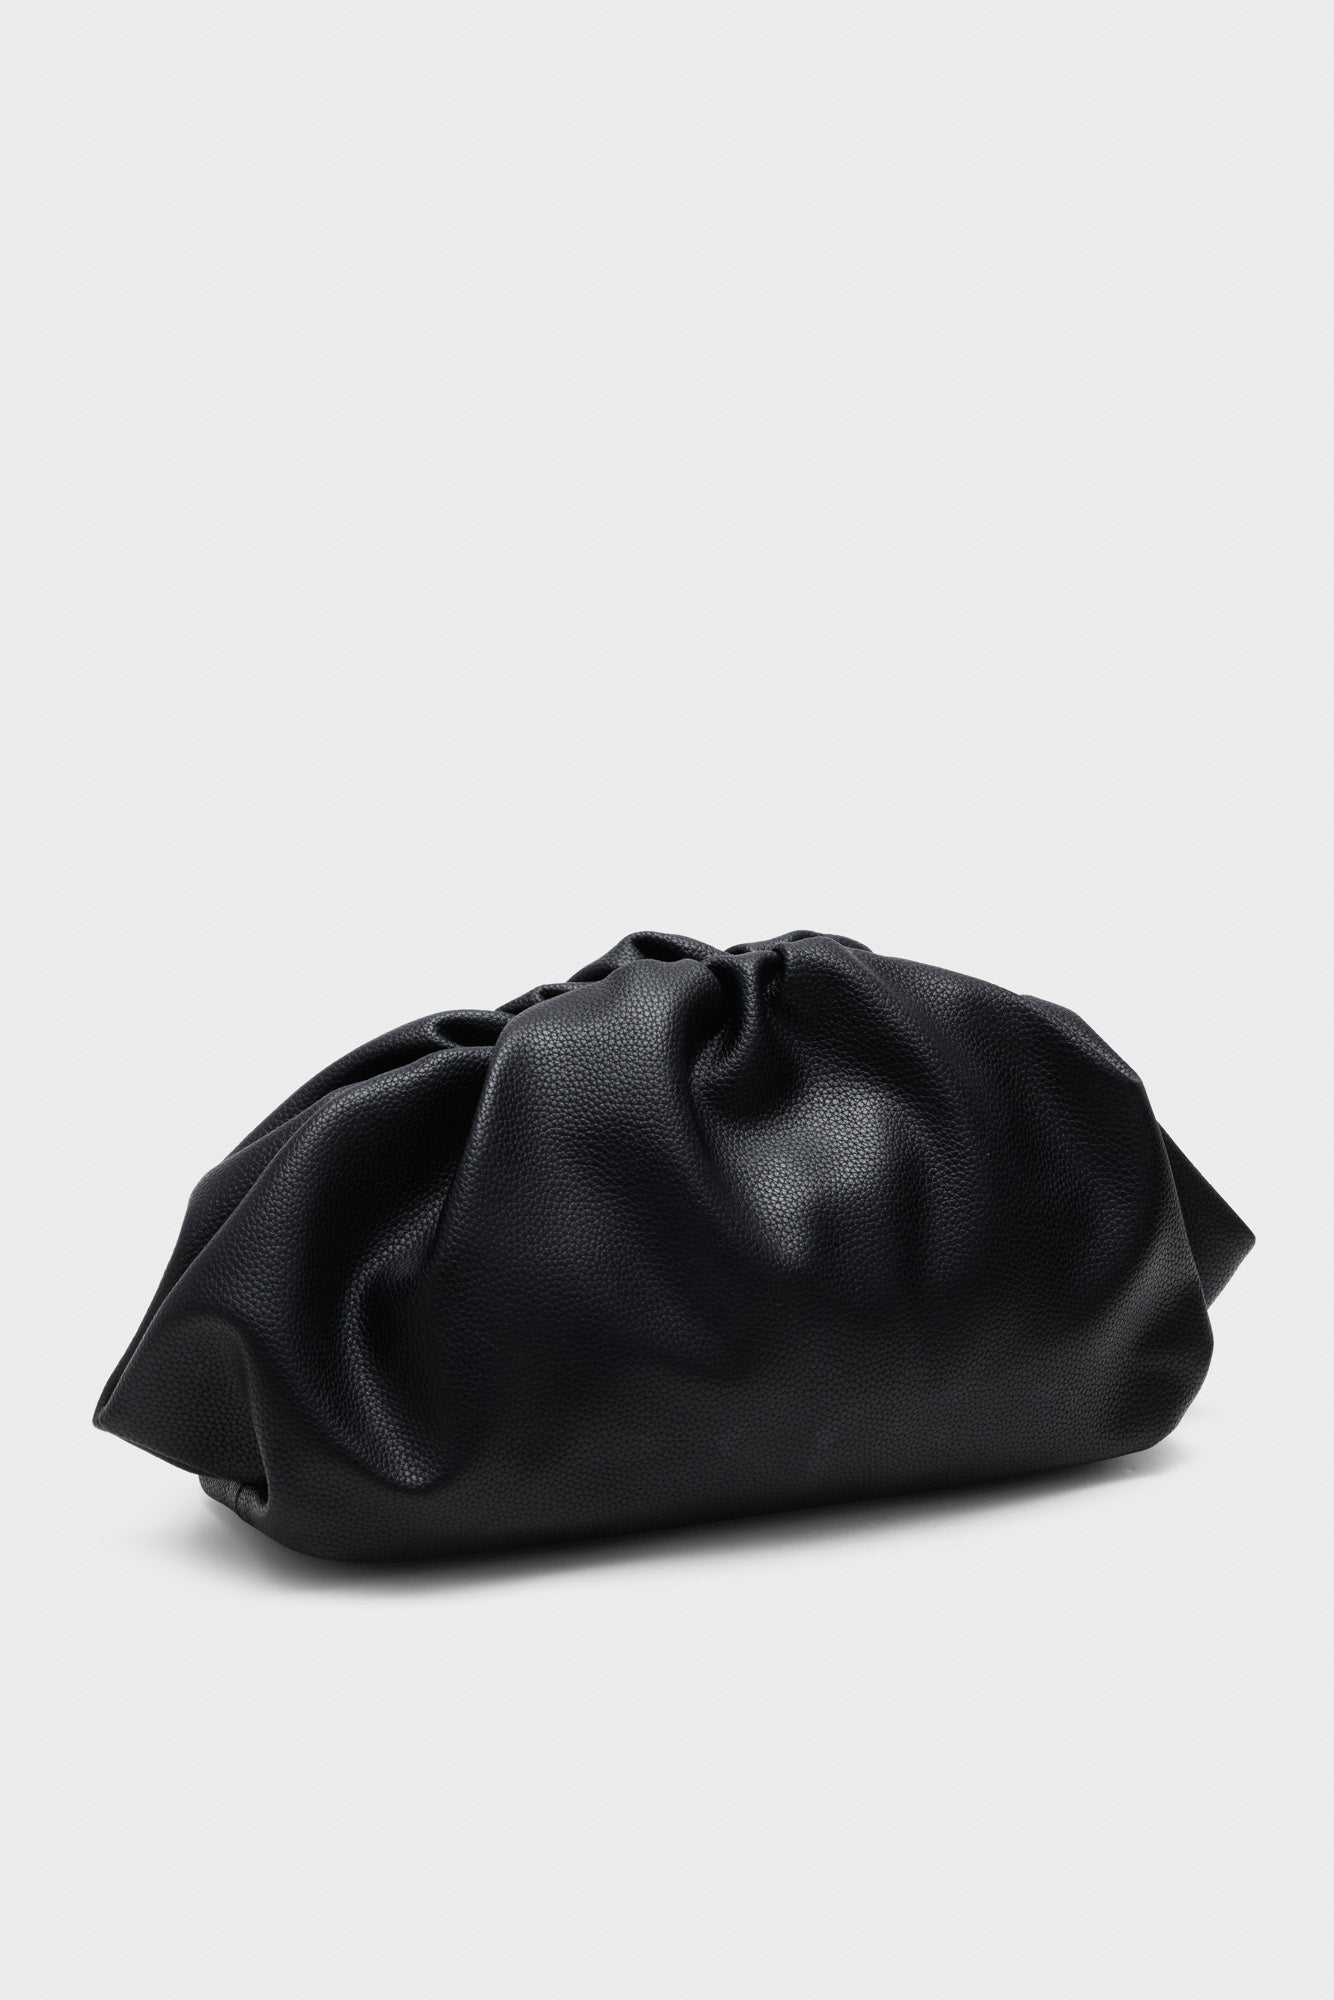 Black&White Crossbody Bag, Cell Phone Pouch Bag, Travel Passport Bag, Bag  from U | eBay